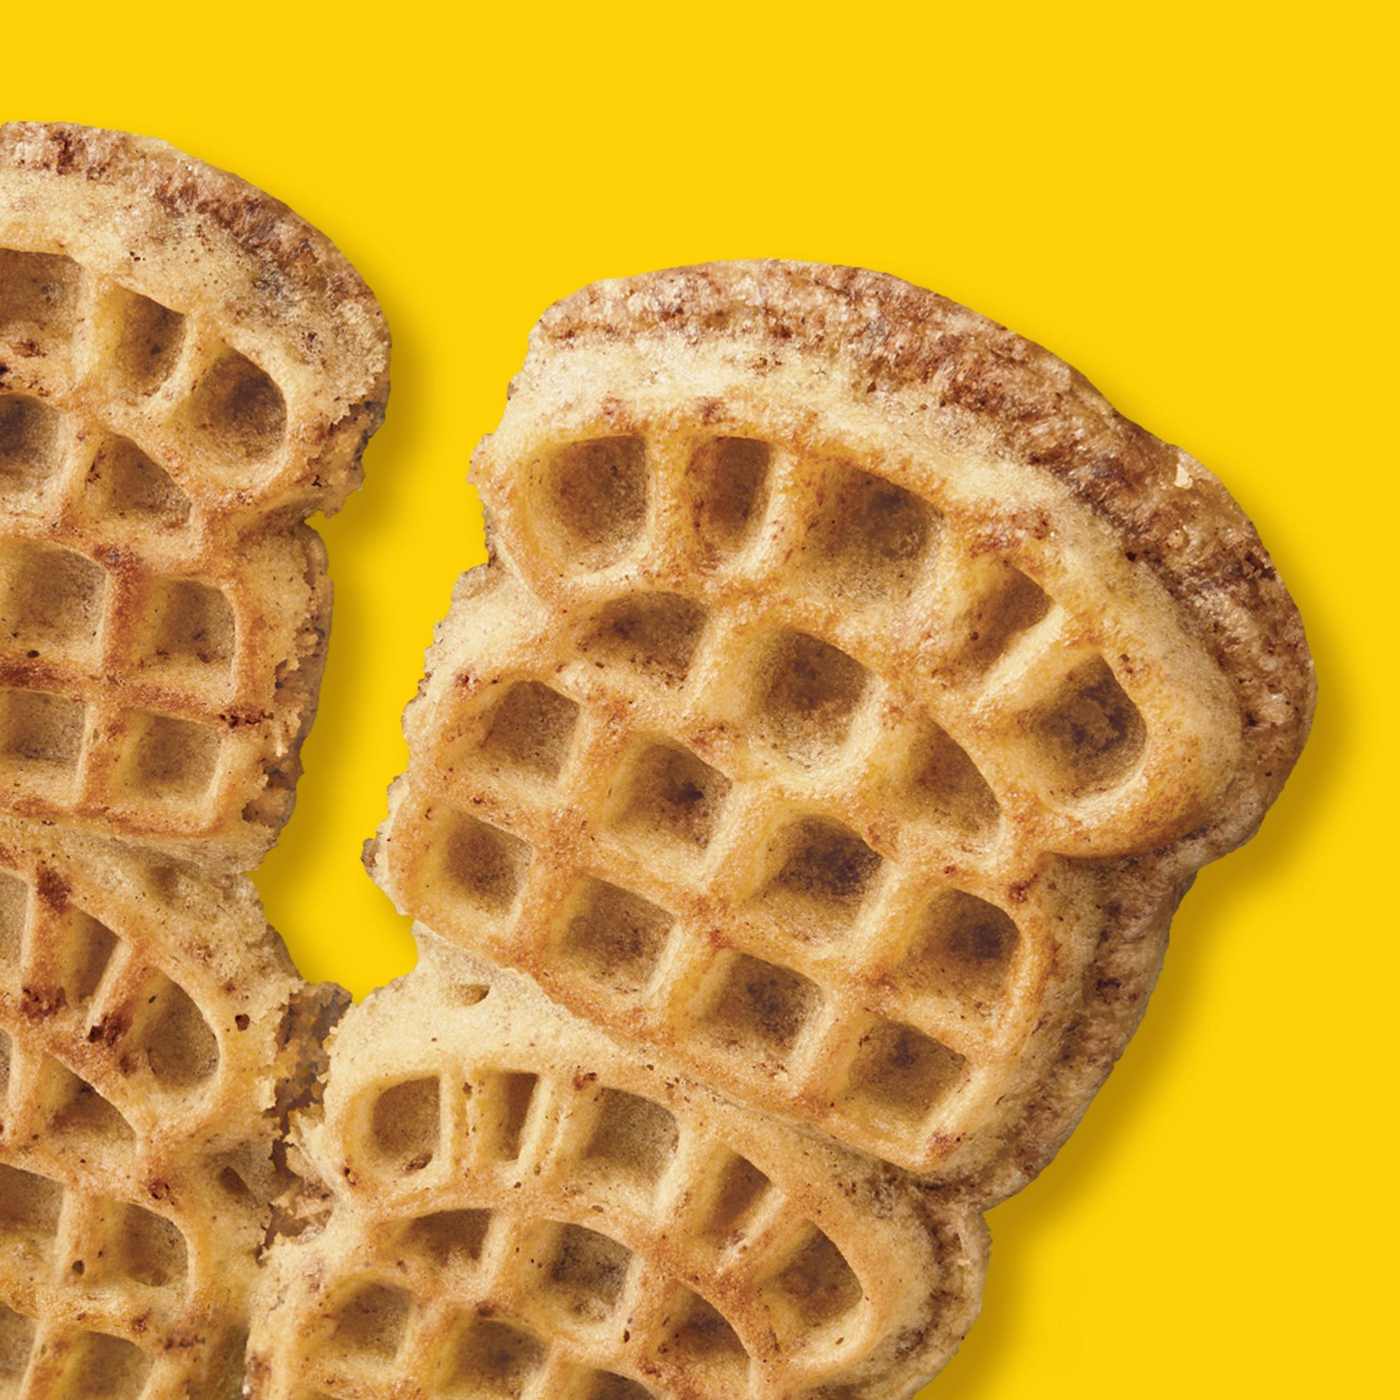 Kellogg's Eggo Minis Cinnamon Toast Waffles - Shop Entrees & Sides at H-E-B